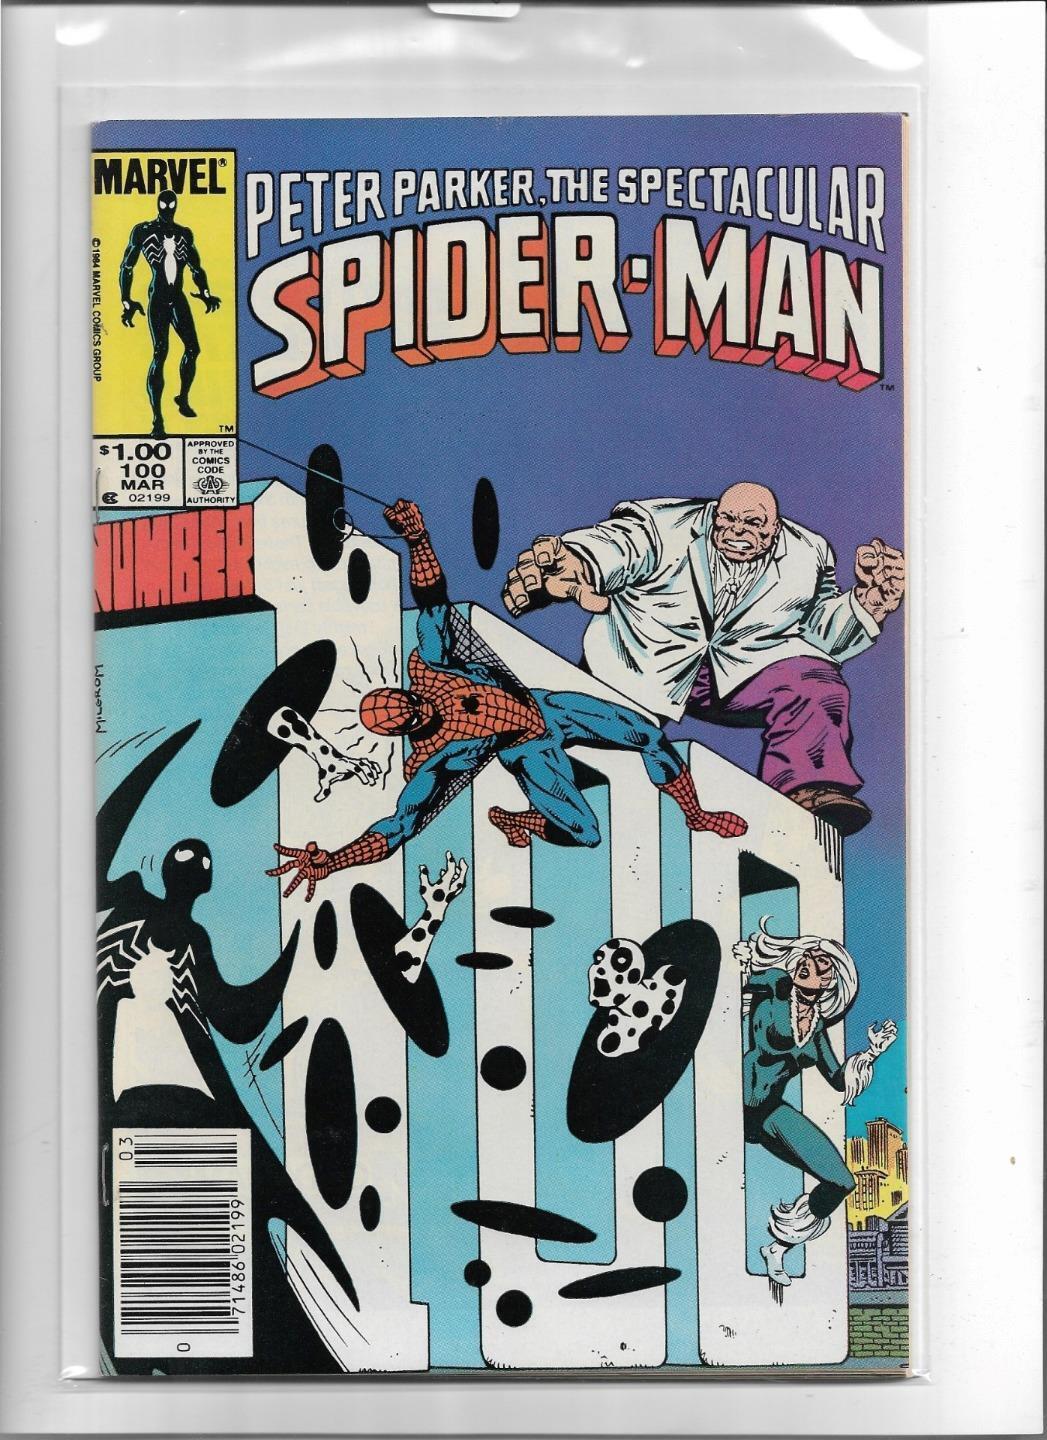 PETER PARKER, THE SPECTACULAR SPIDER-MAN #100 1985 VERY FINE+ 8.5 4376 SPOT